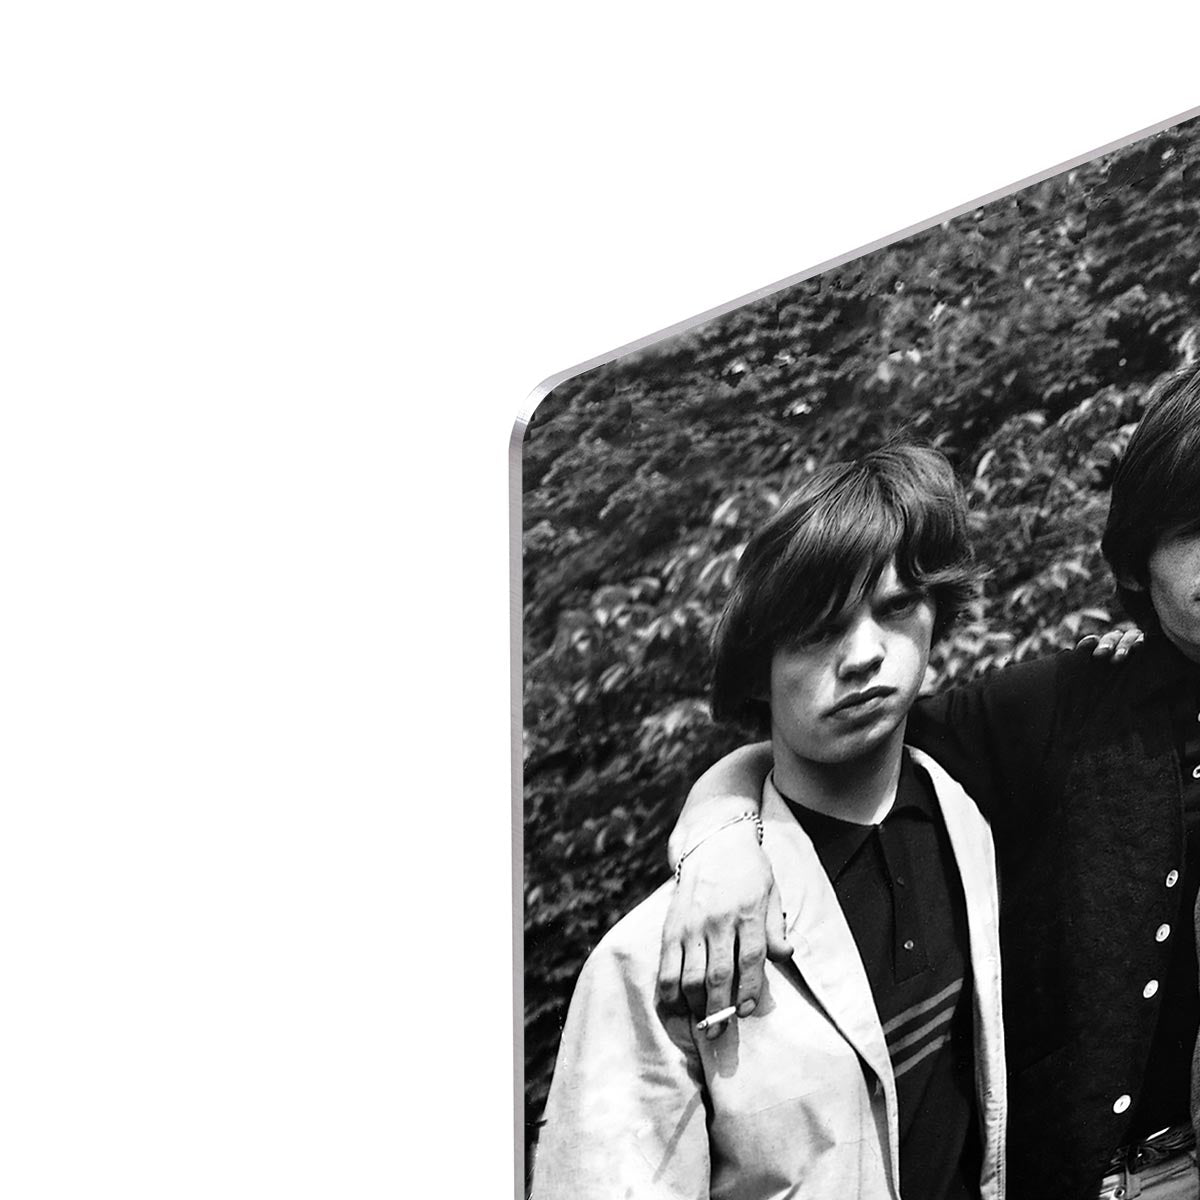 Rolling Stones 1964 HD Metal Print